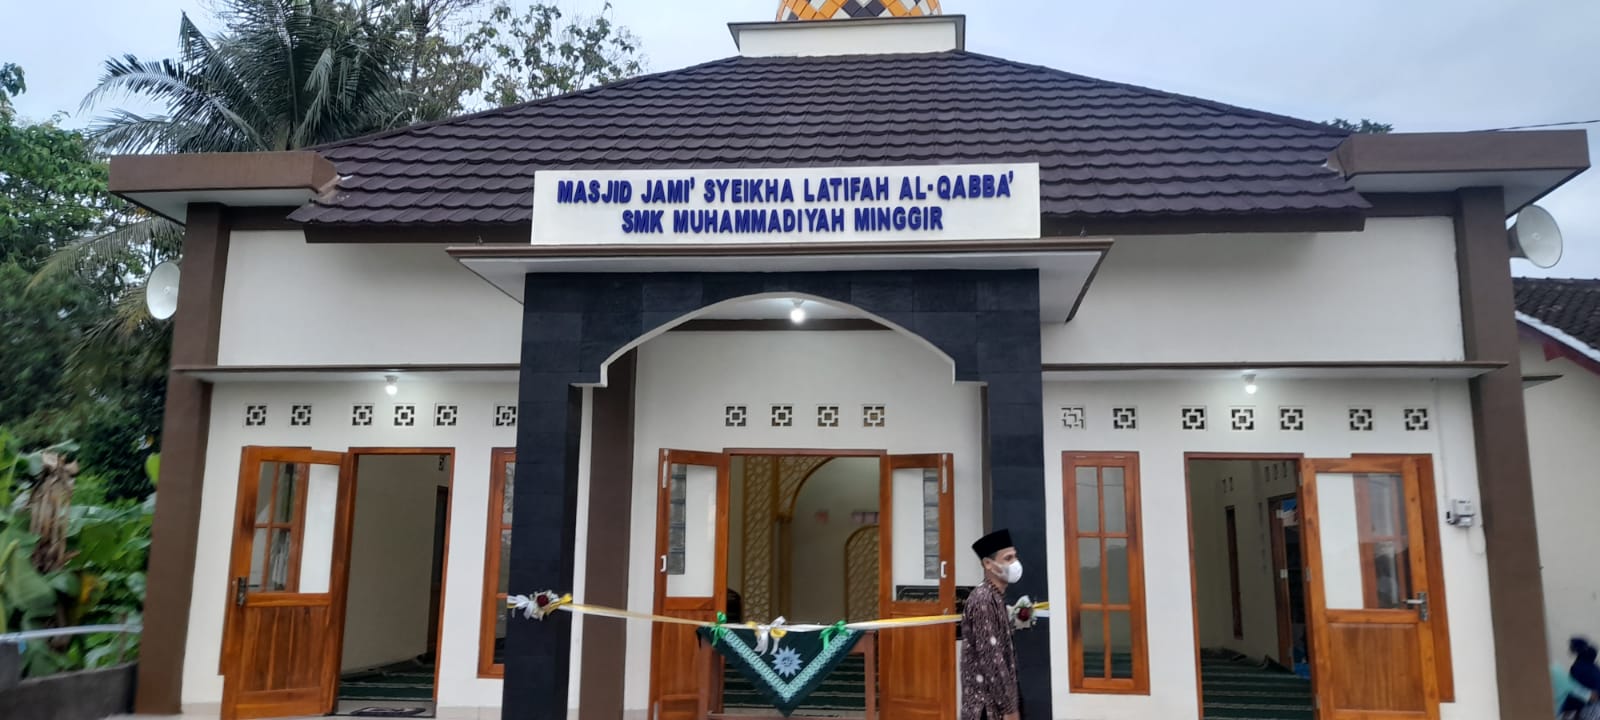 Rektor UMY Resmikan Masjid Jami' Syeikha Latifa Al Qabba SMK Muhammadiyah Minggir